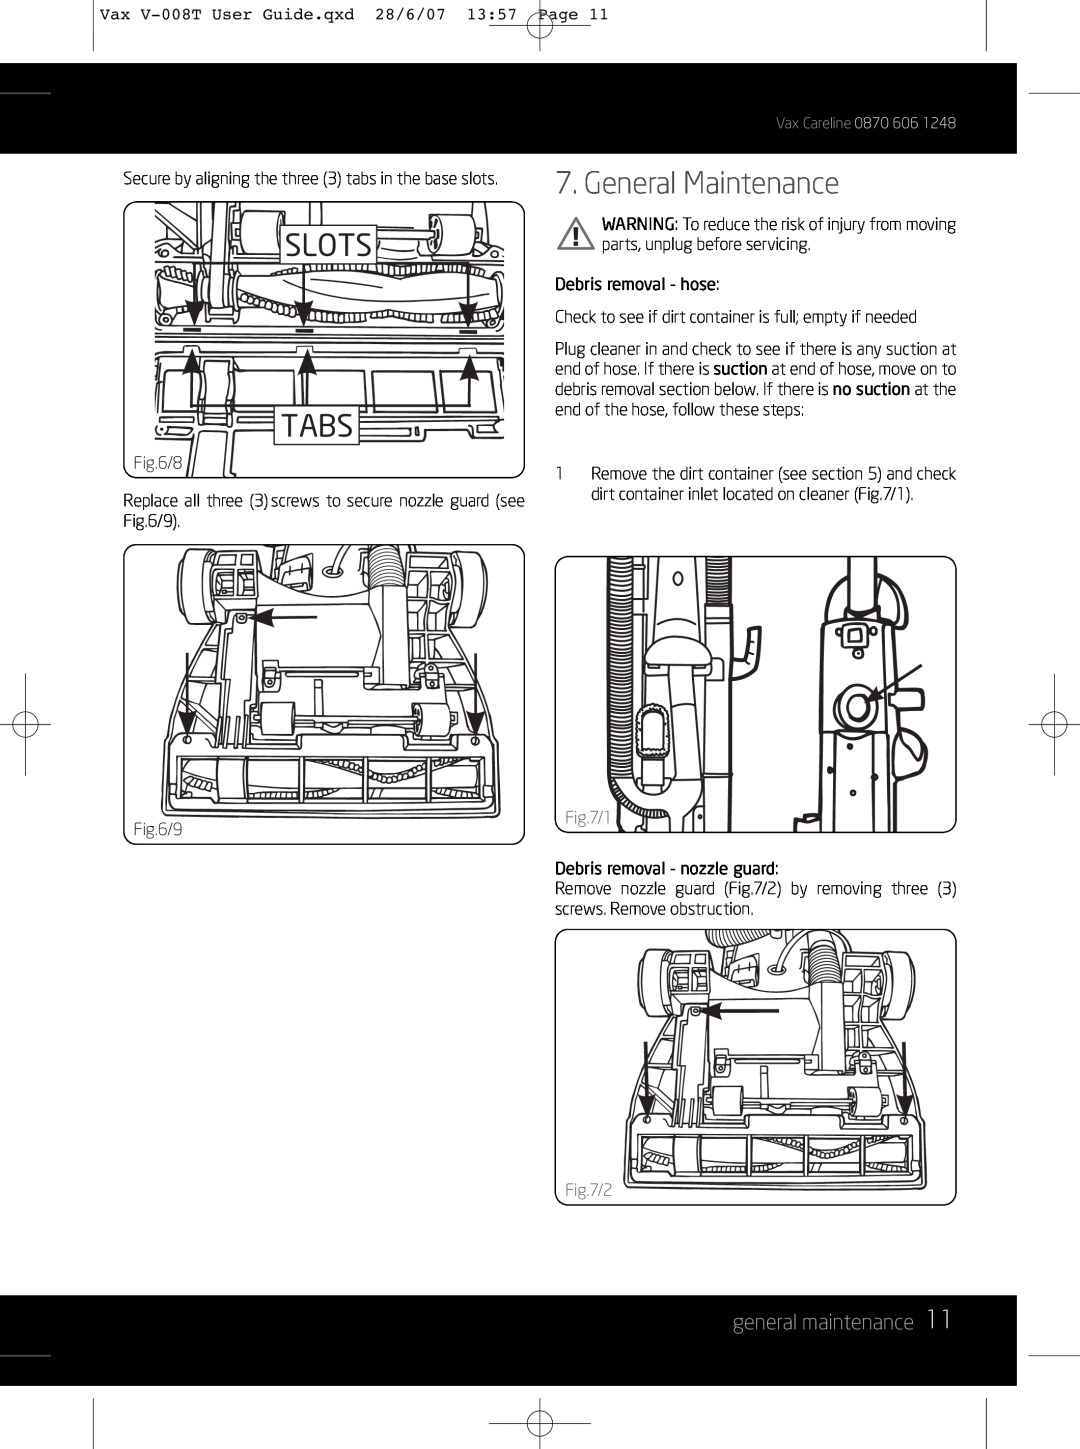 Vax V-008T instruction manual General Maintenance, general maintenance, 2, Slots, Tabs 